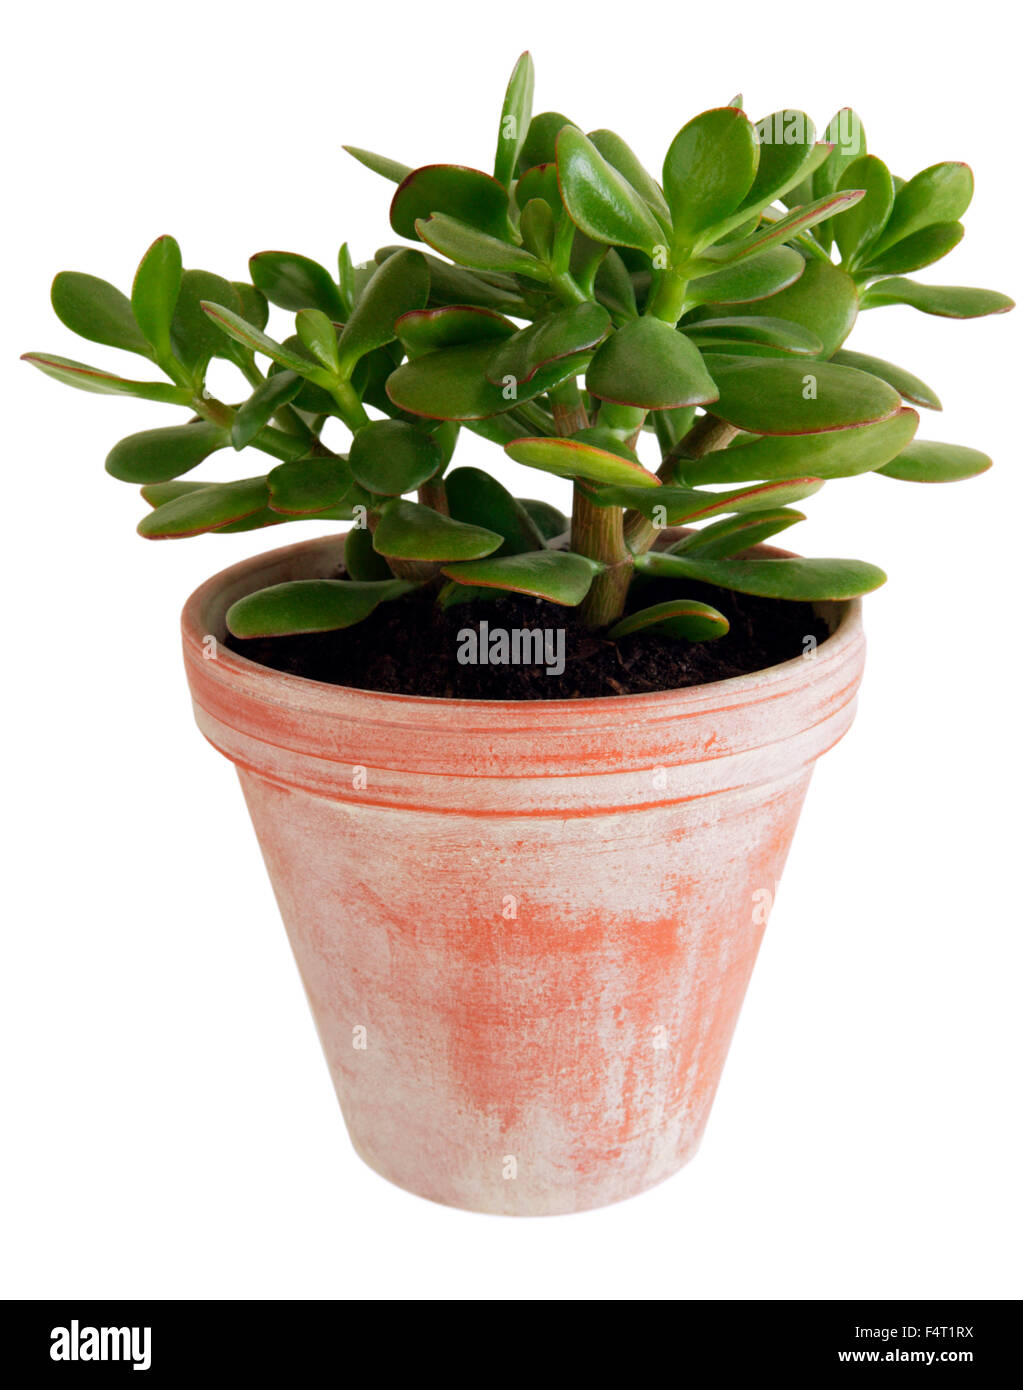 Crassula (money plant) in terracotta pot against white background Stock Photo